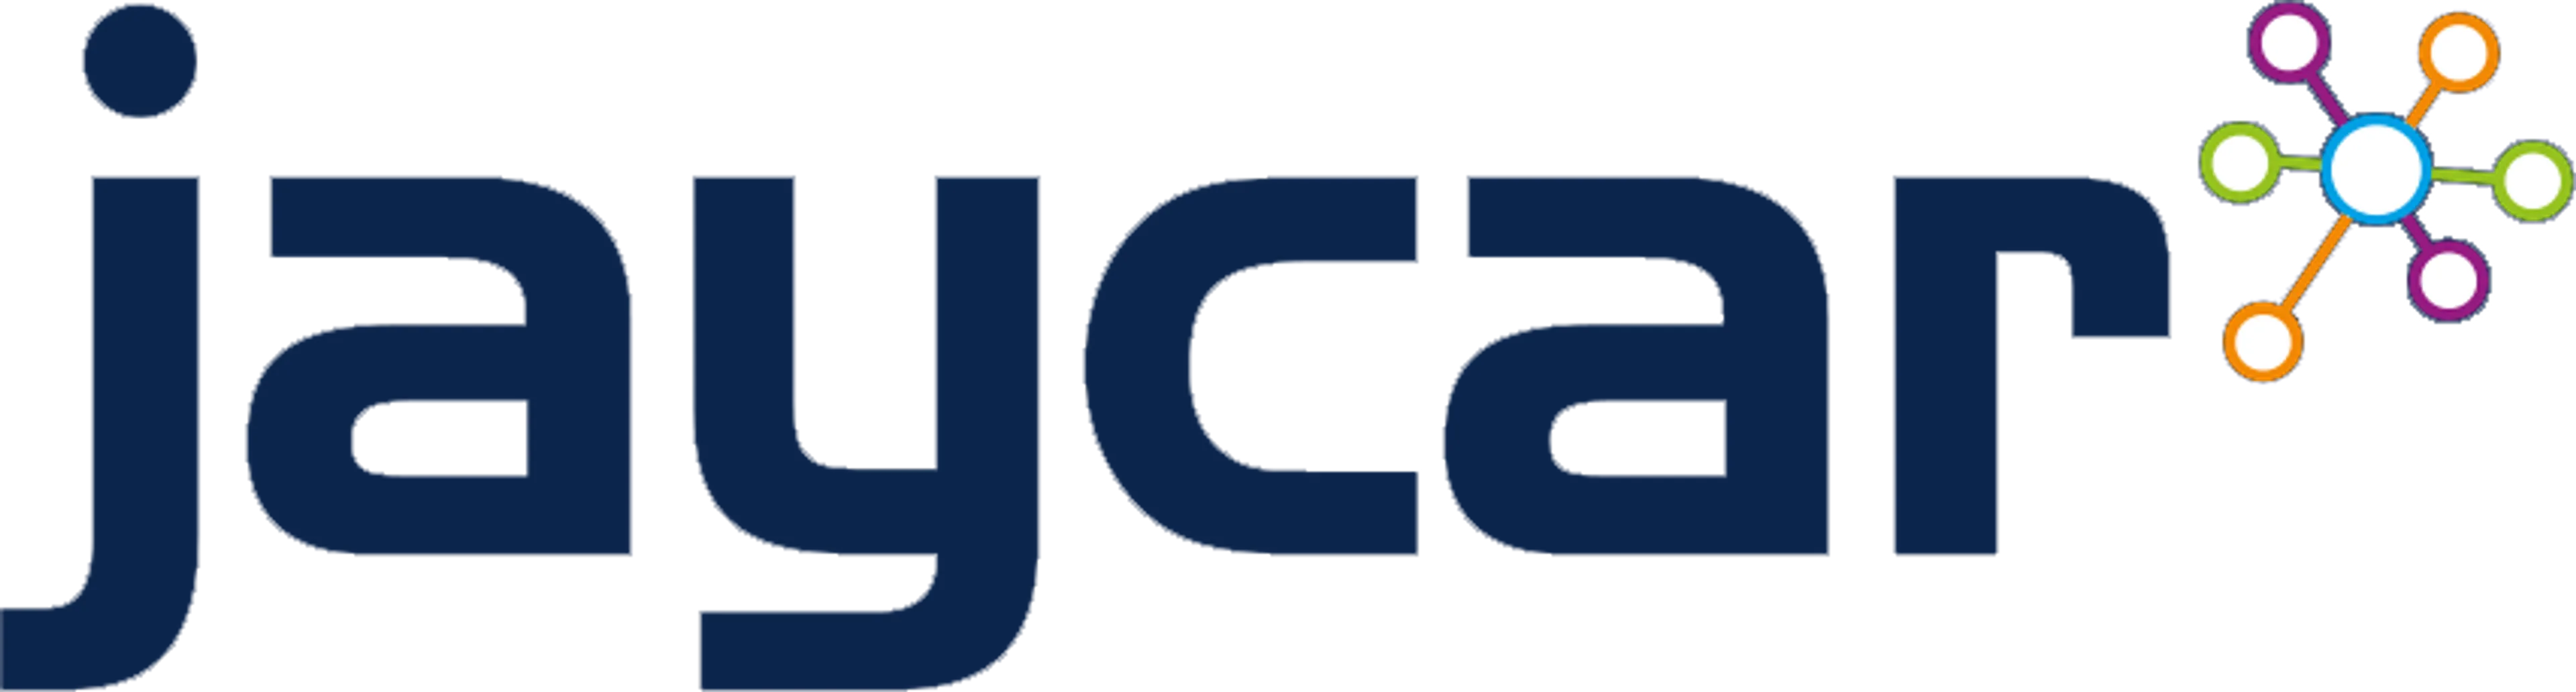 JAYCAR ELECTRONICS logo